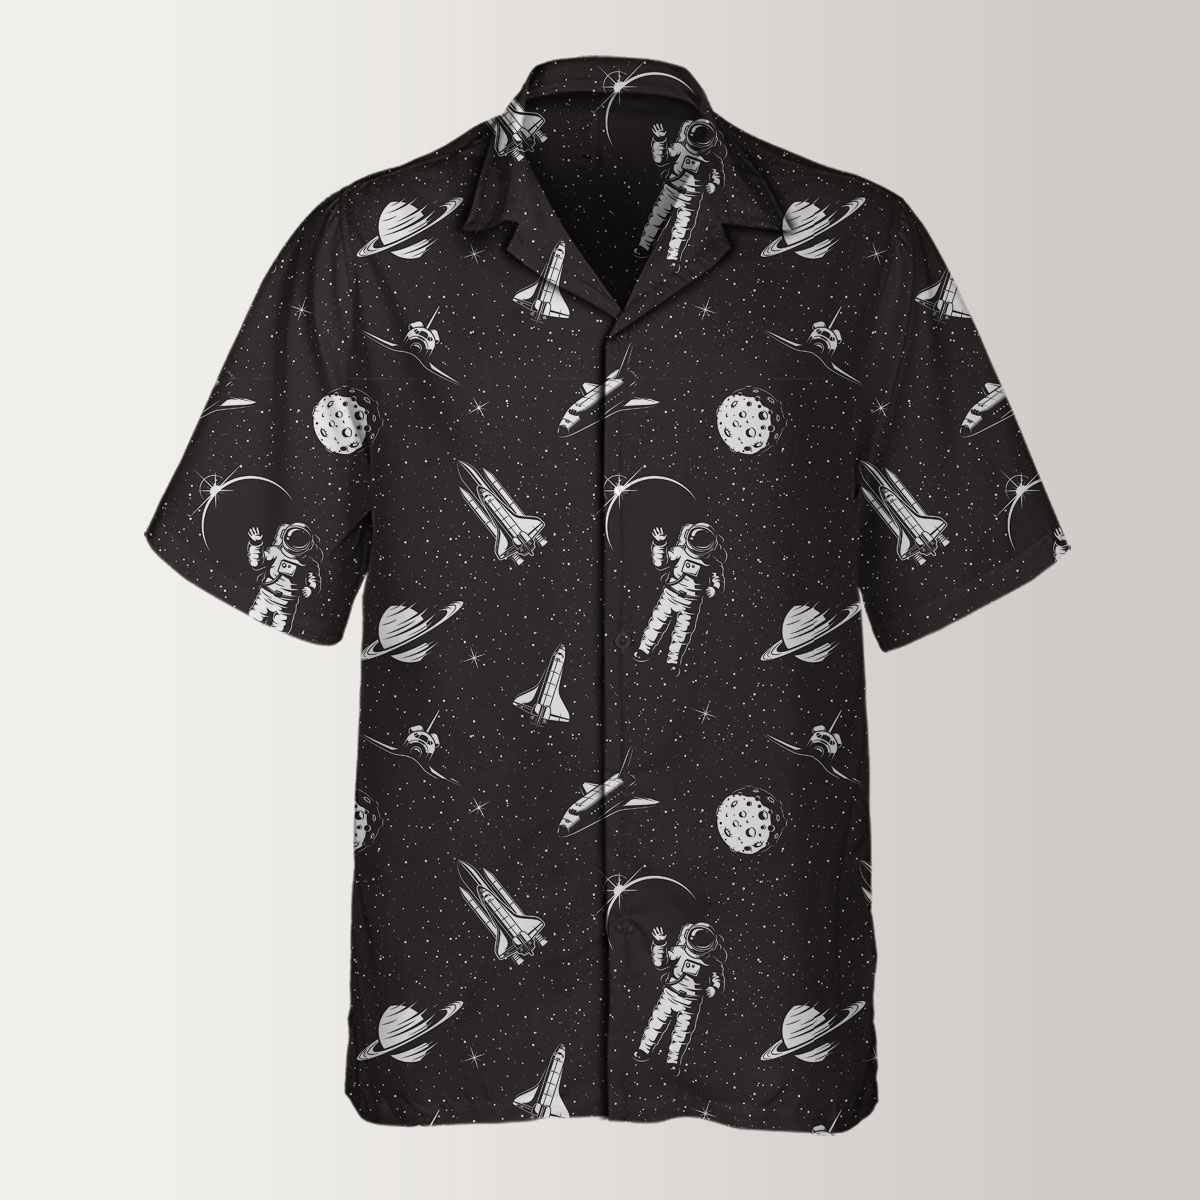 3D Black And White Astronaut Hawaiian Shirt